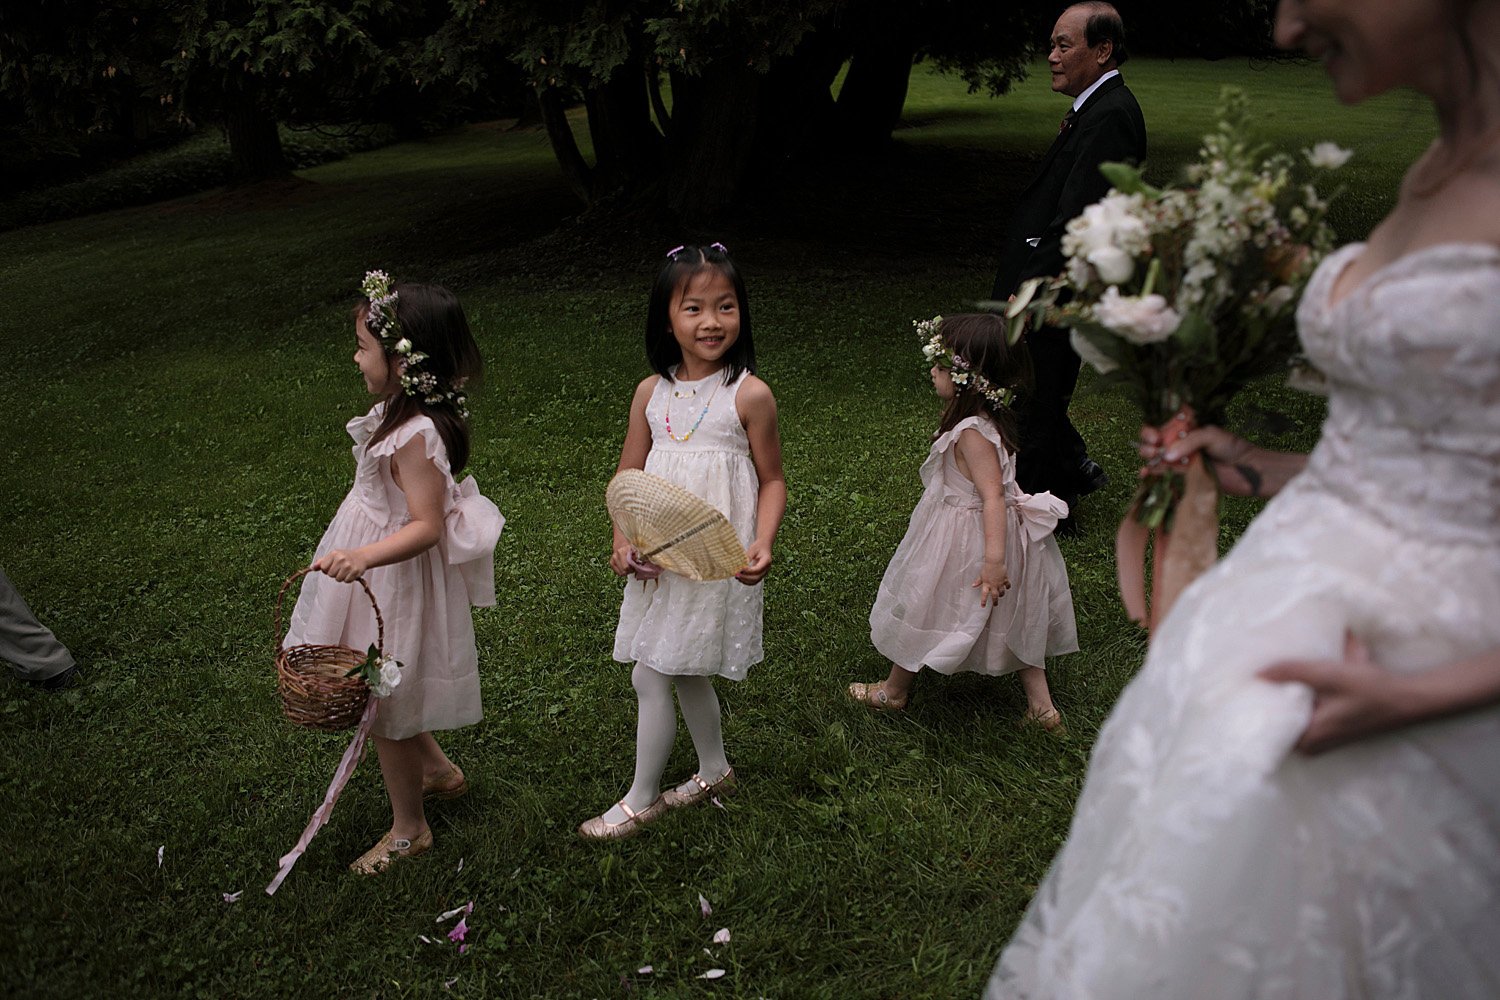 Wisconsin Chicago documentary wedding photographer 203.jpg